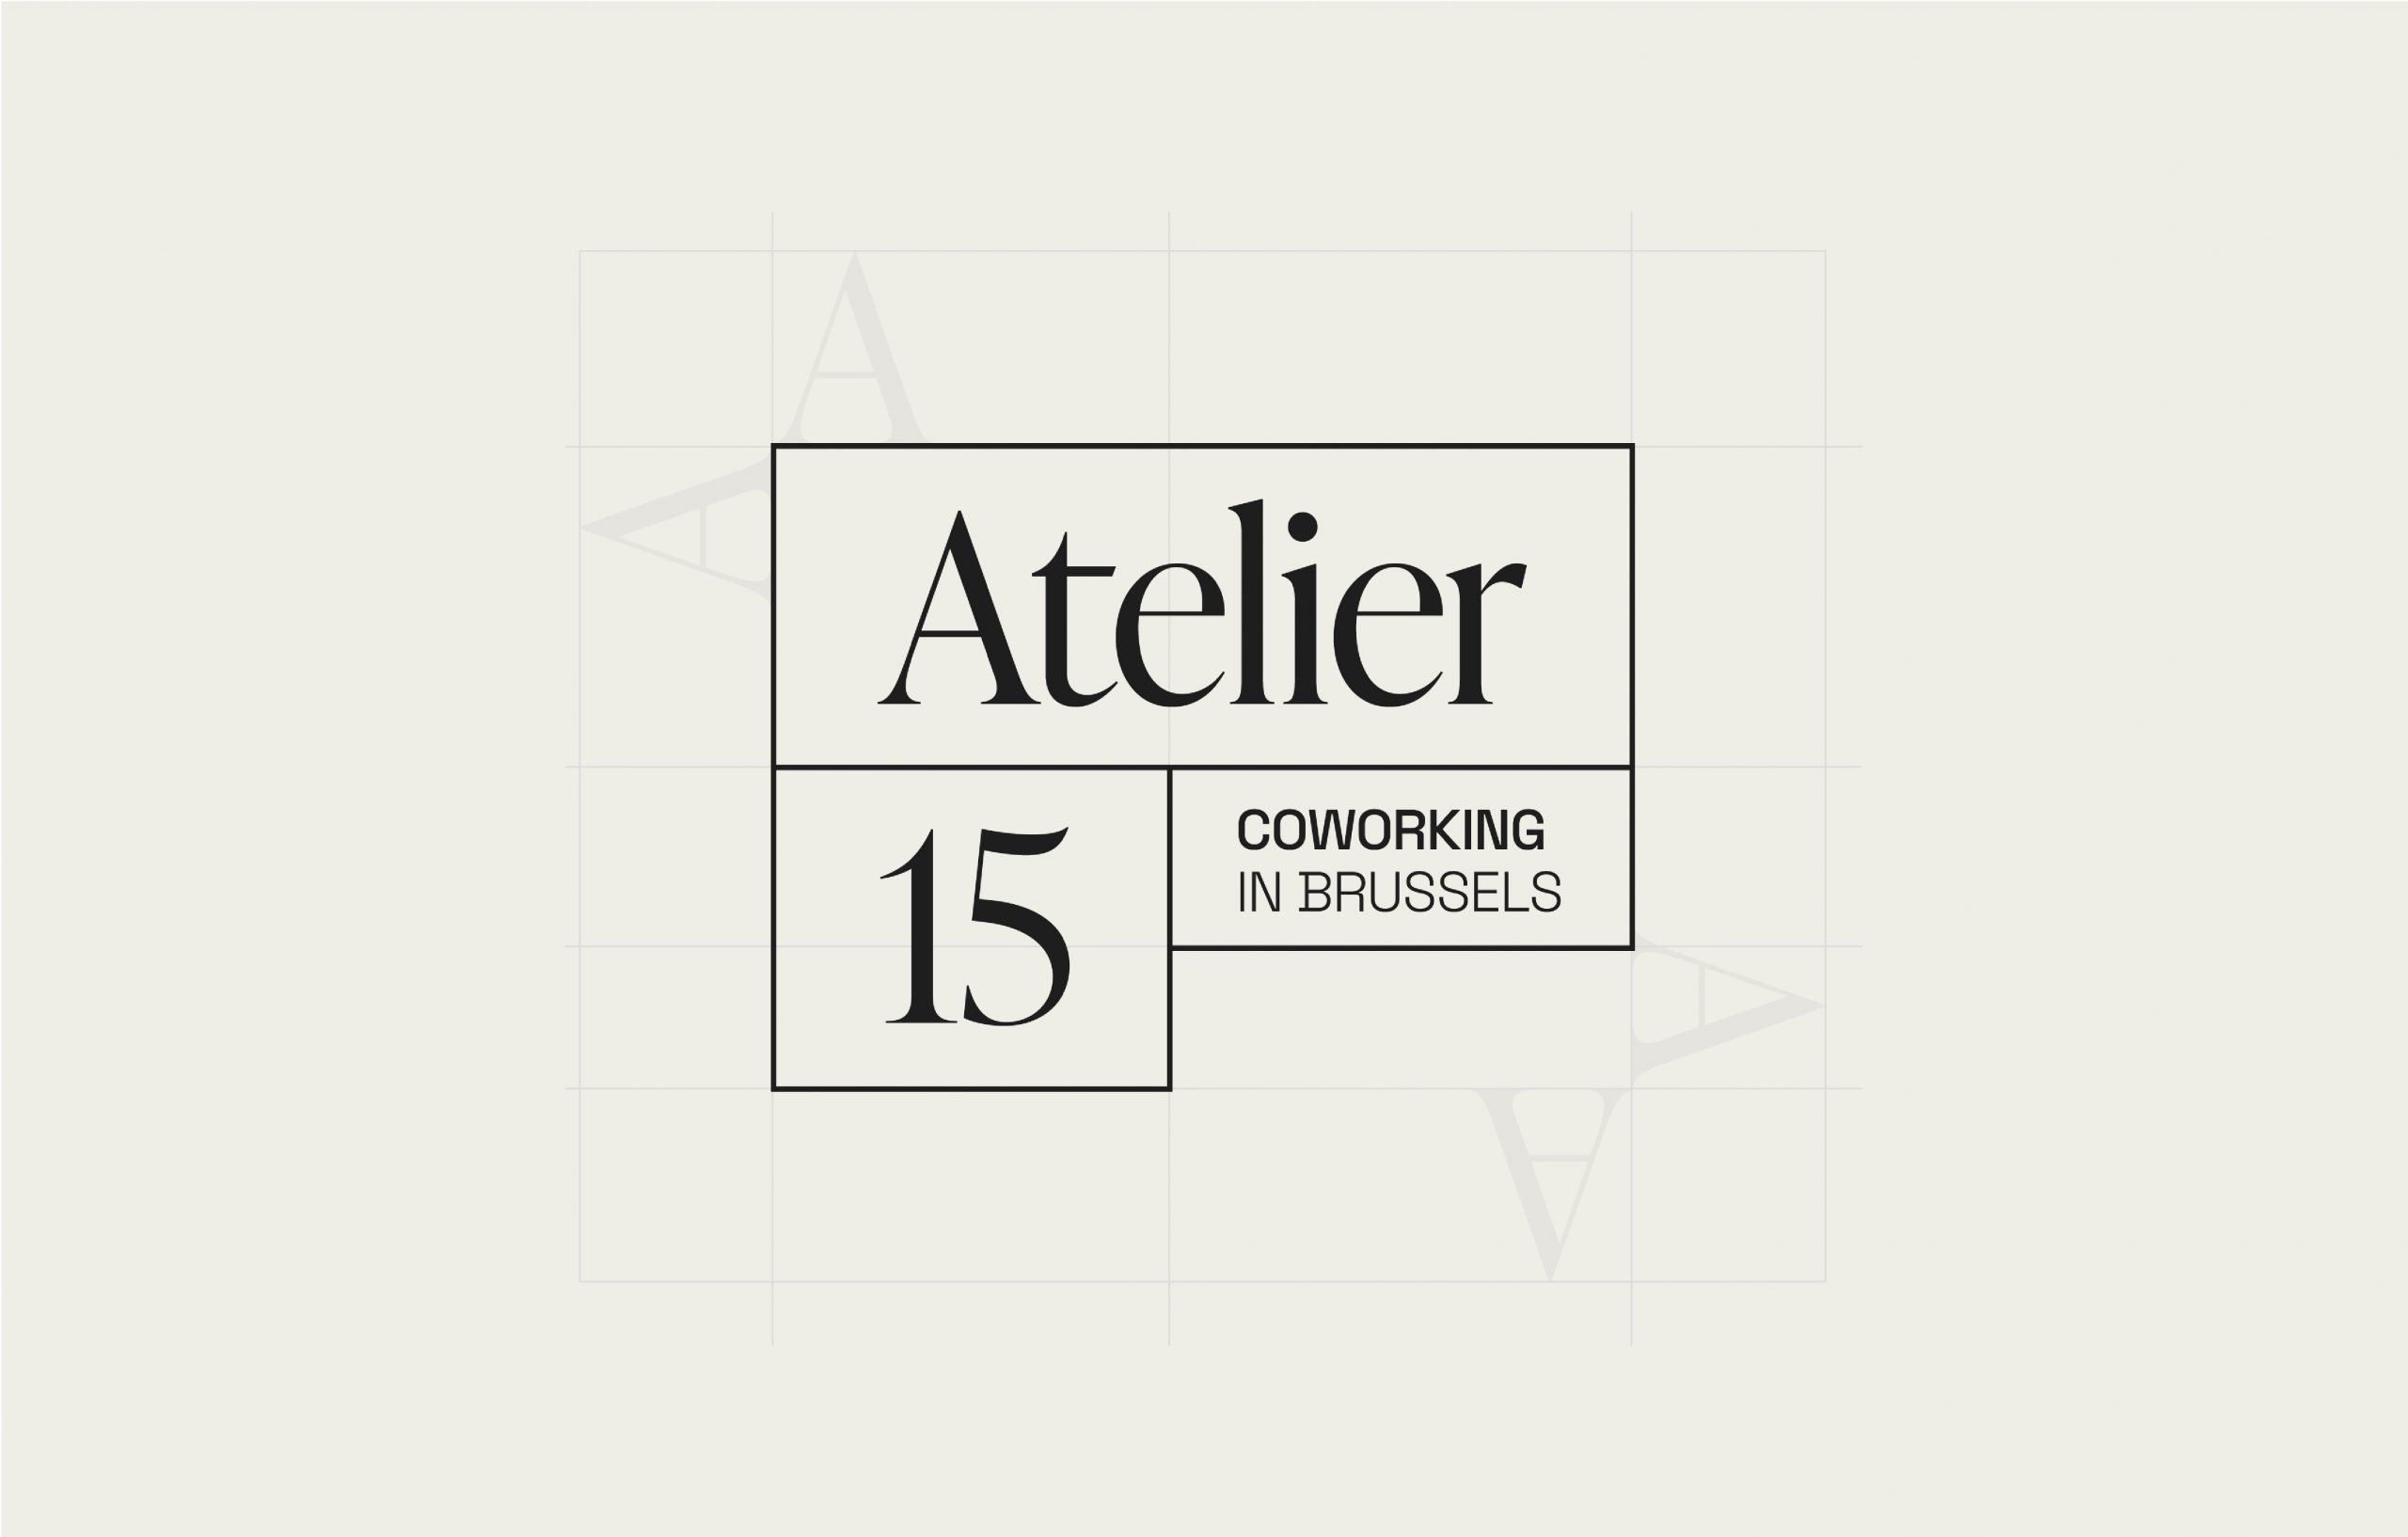 Logo size presentation of the Atelier15 logo